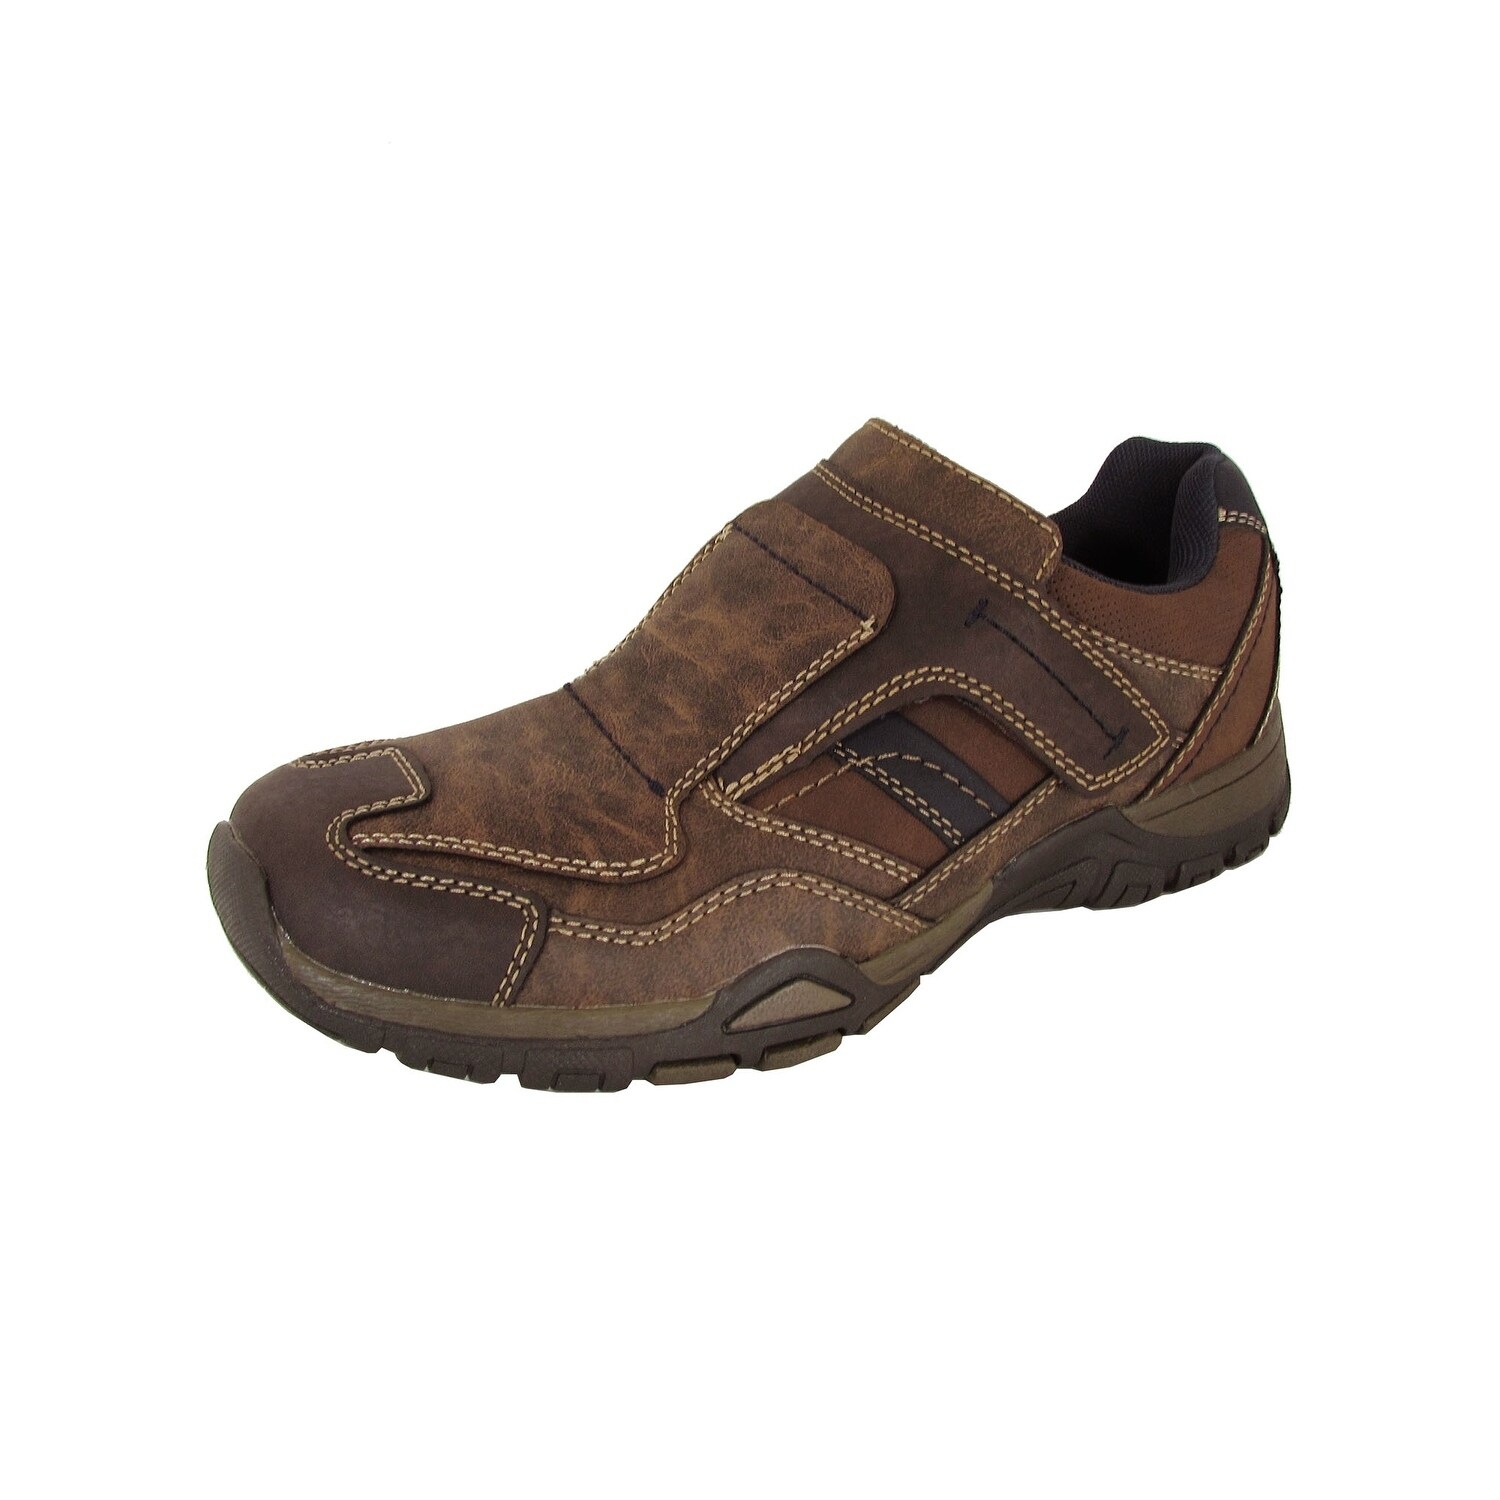 tan leather slip on sneakers